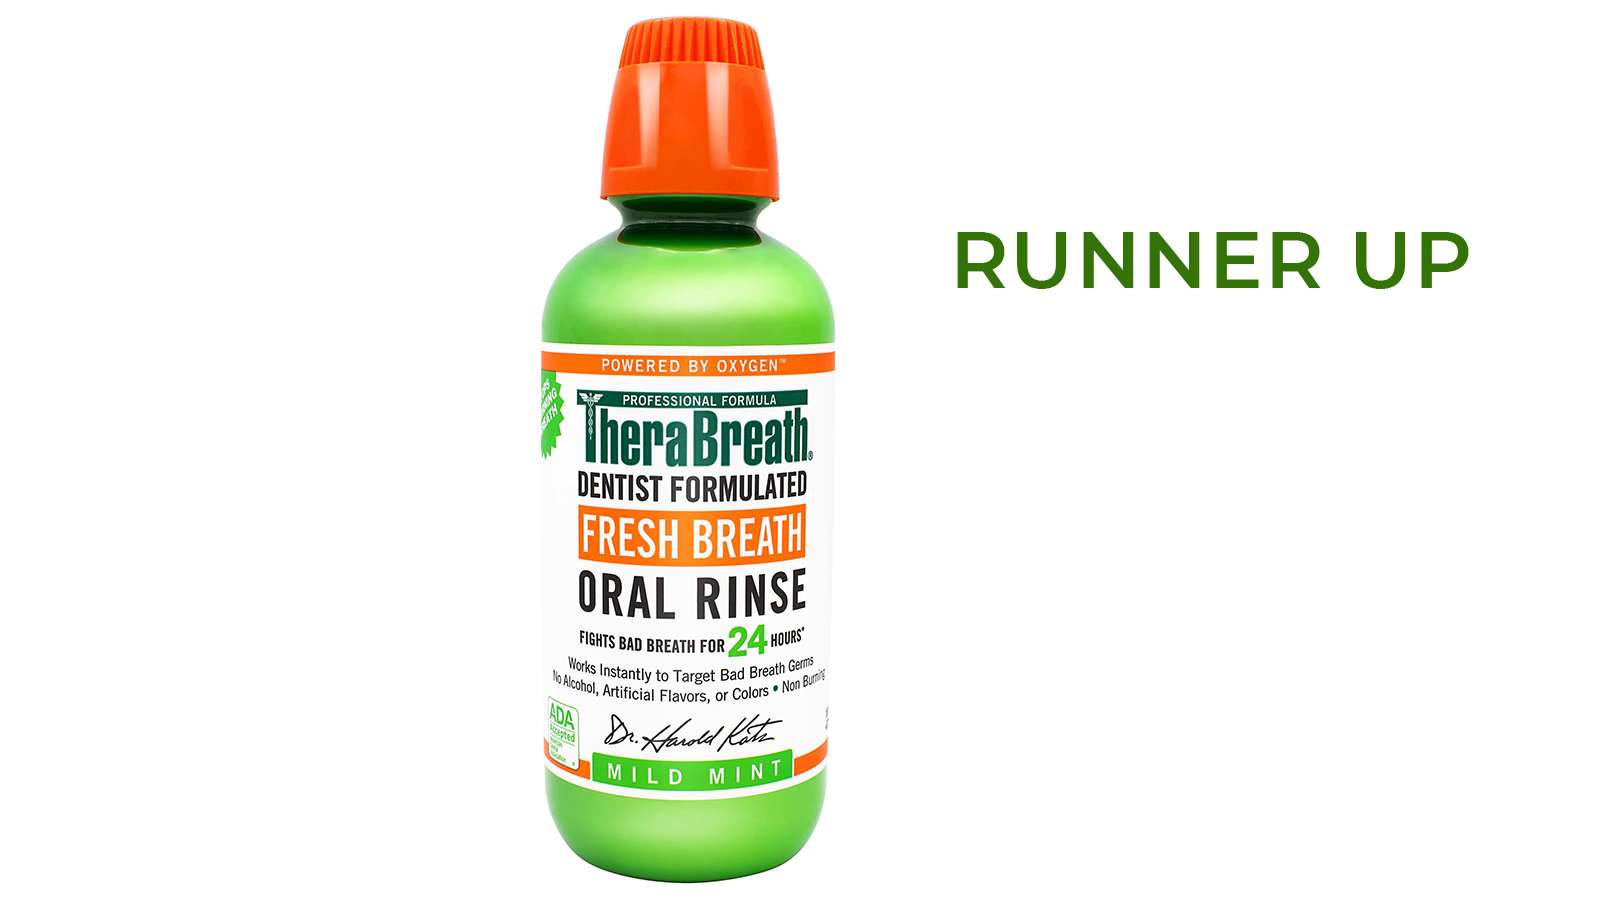 Final verdict - runner up chosen as therabreath fresh breath oral rinse